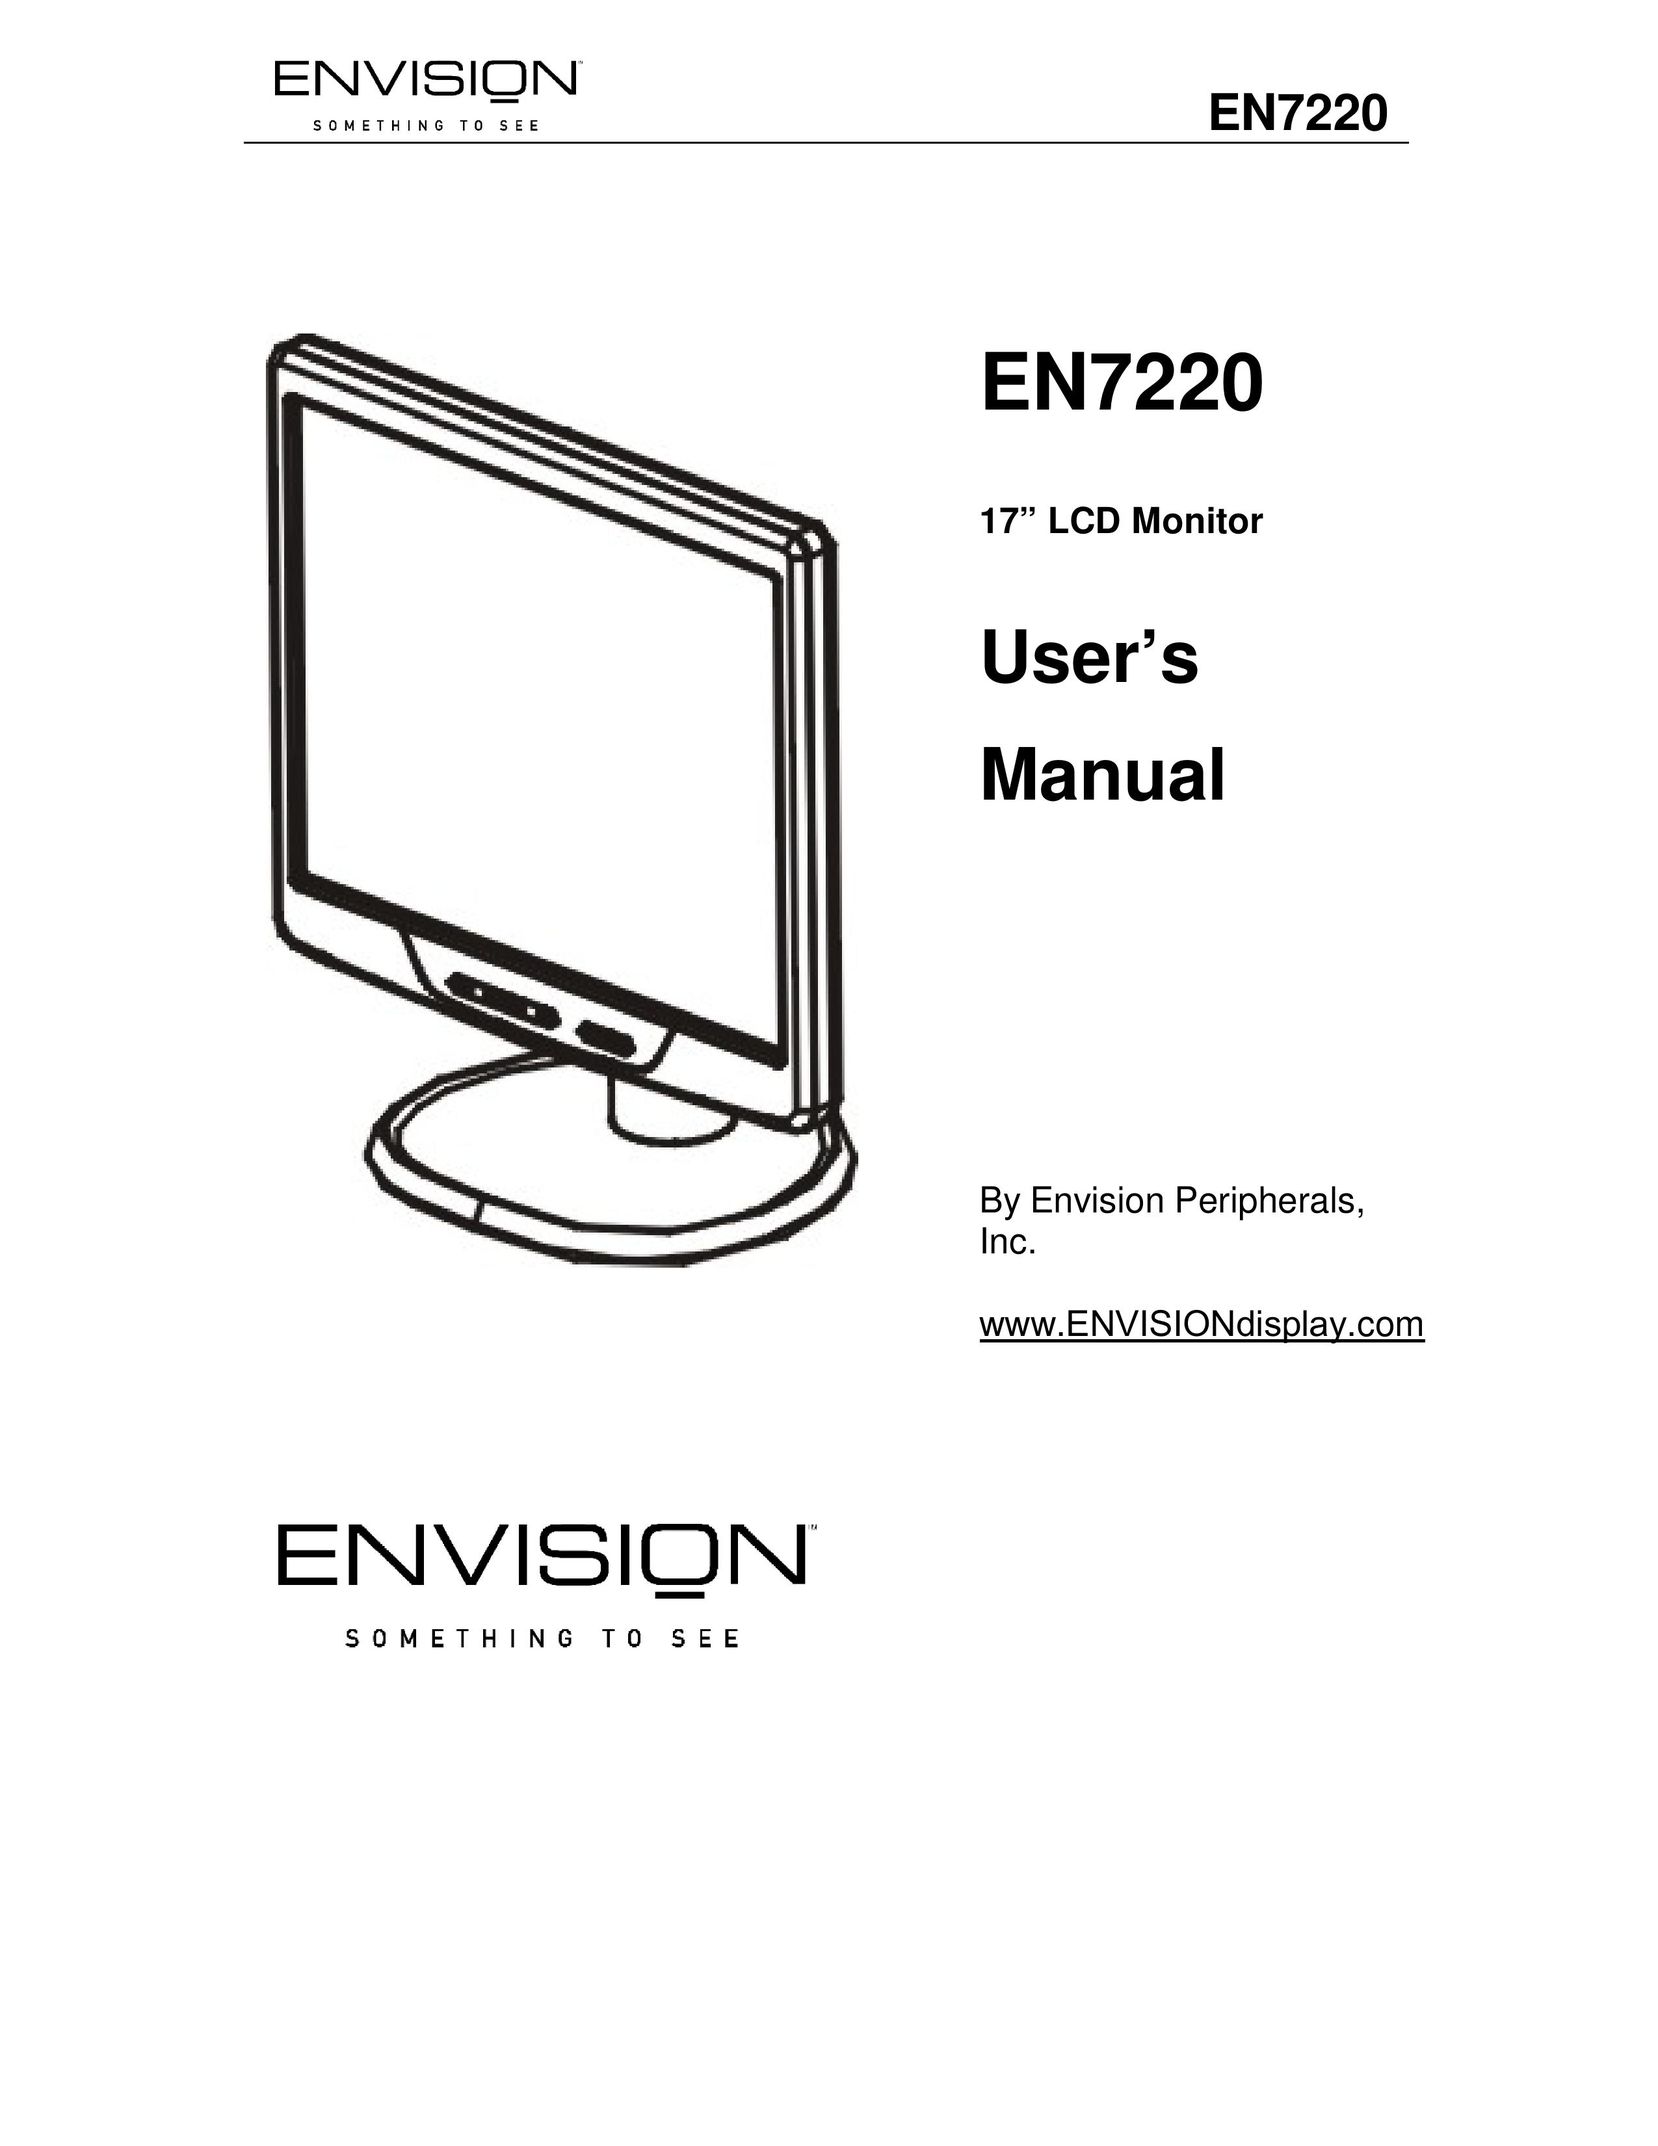 Envision Peripherals EN7220 Computer Monitor User Manual